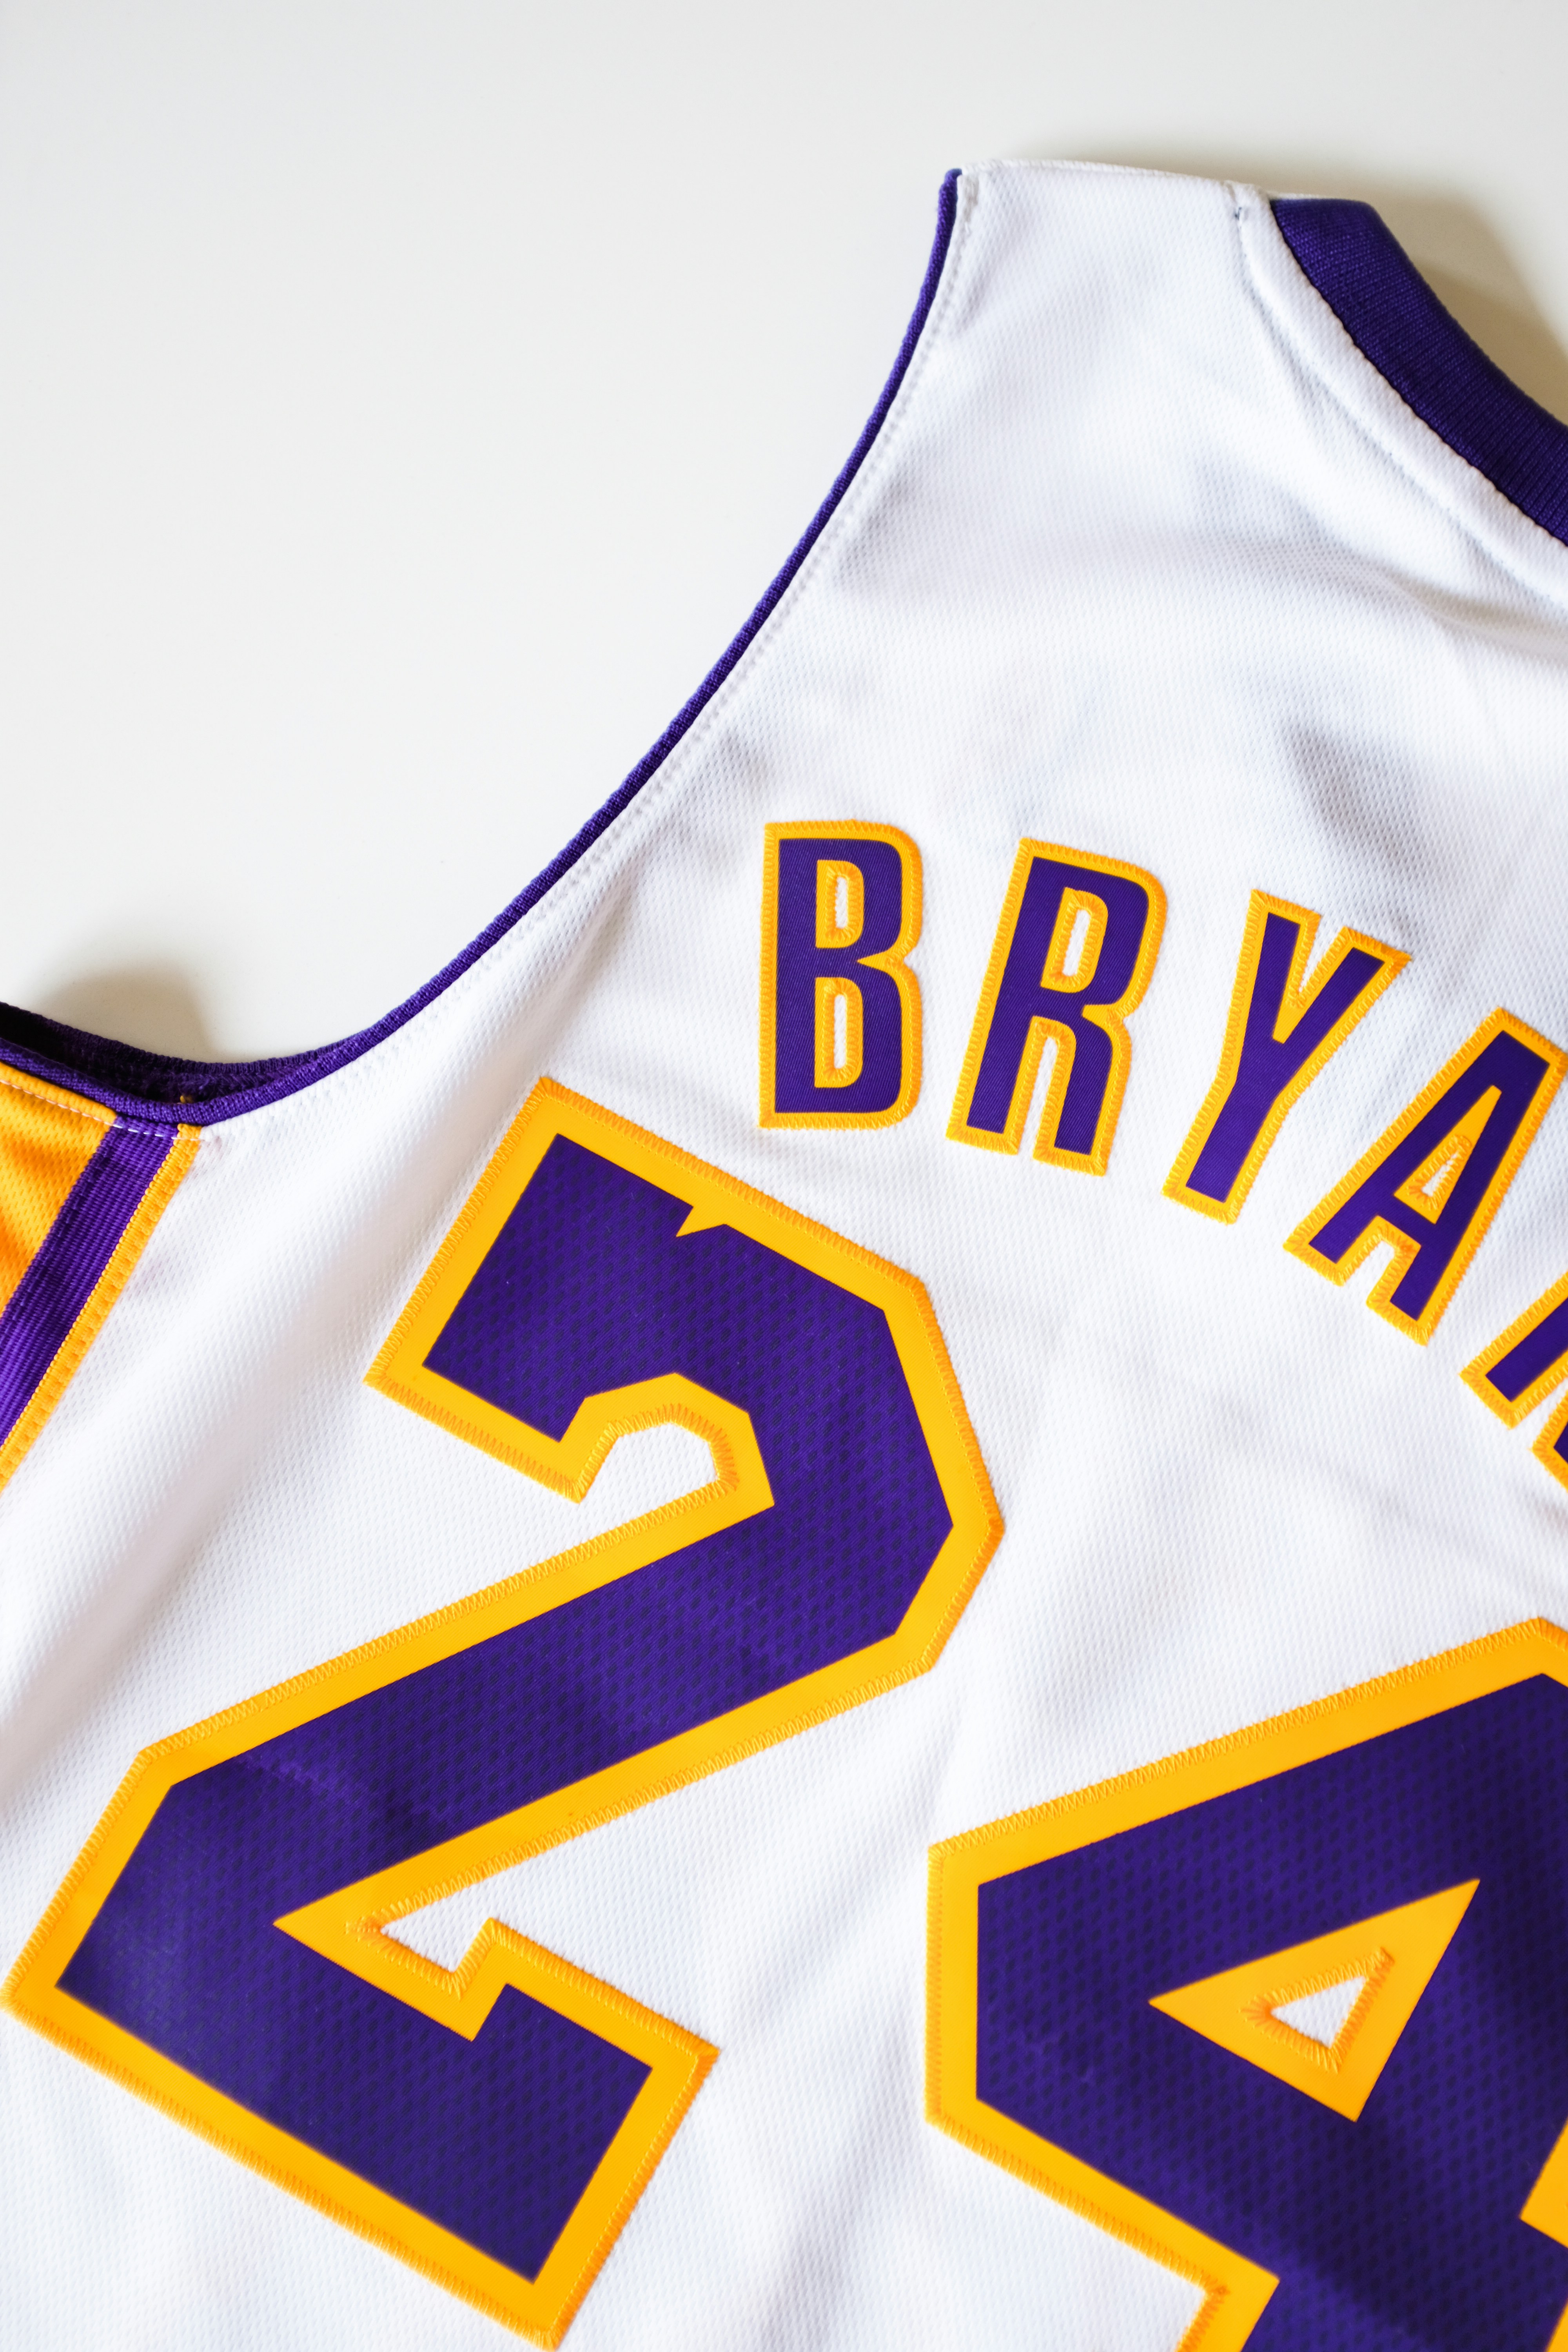 Lakers Kobe Bryant jersey #24 Photo taken by @charlesdeluvio